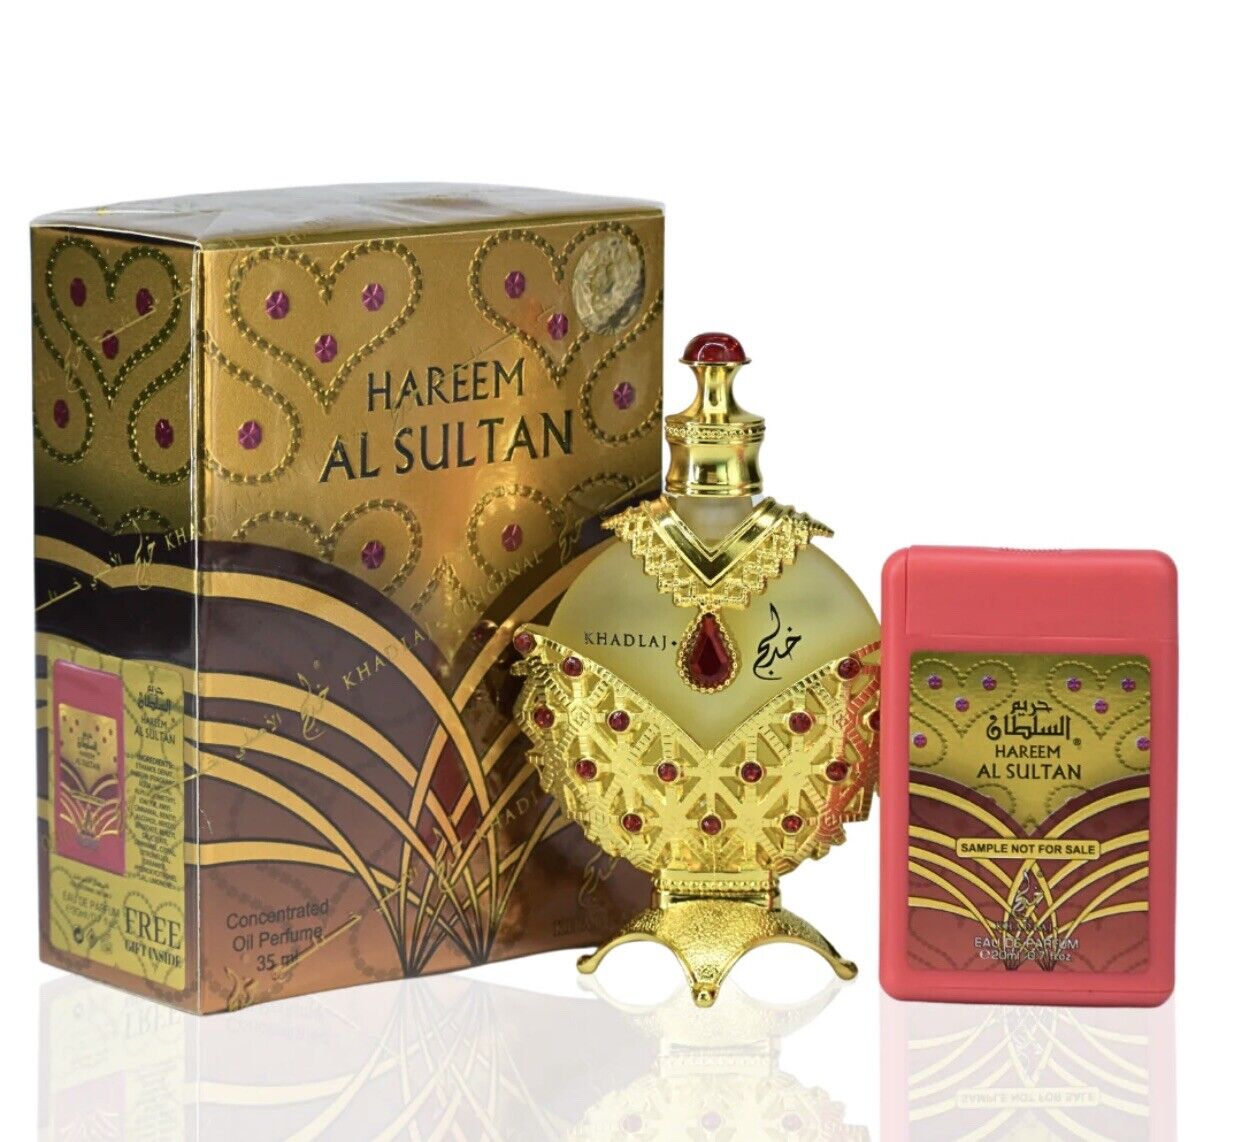 Hareem Al Sultan Gold Attar Concentrated Perfume Oil 35 ML By Khadlaj